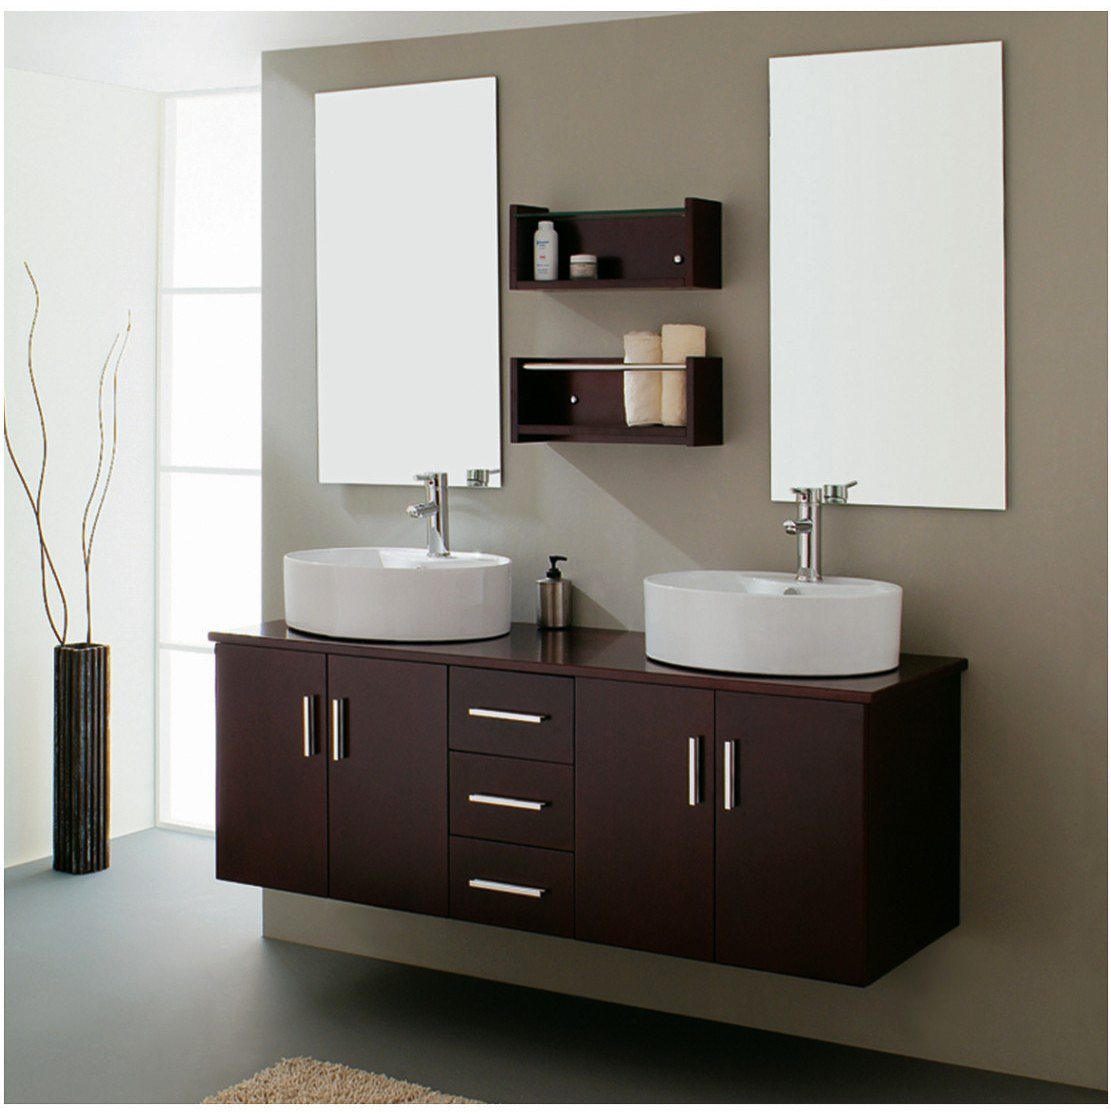 09-modern-bathroom-vanities